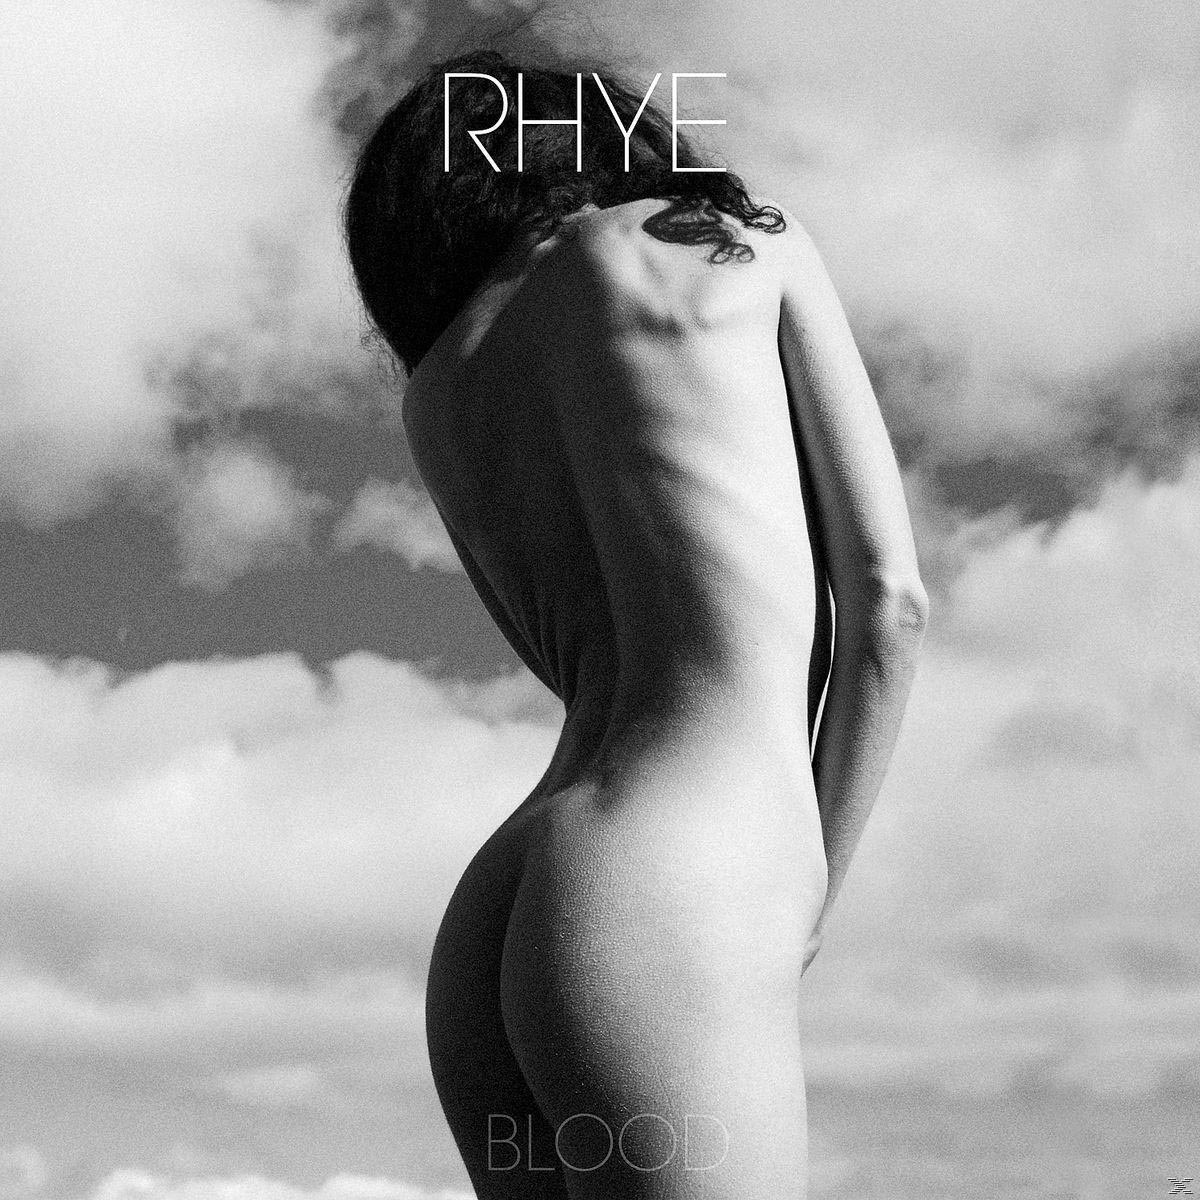 Rhye - (CD) - Blood